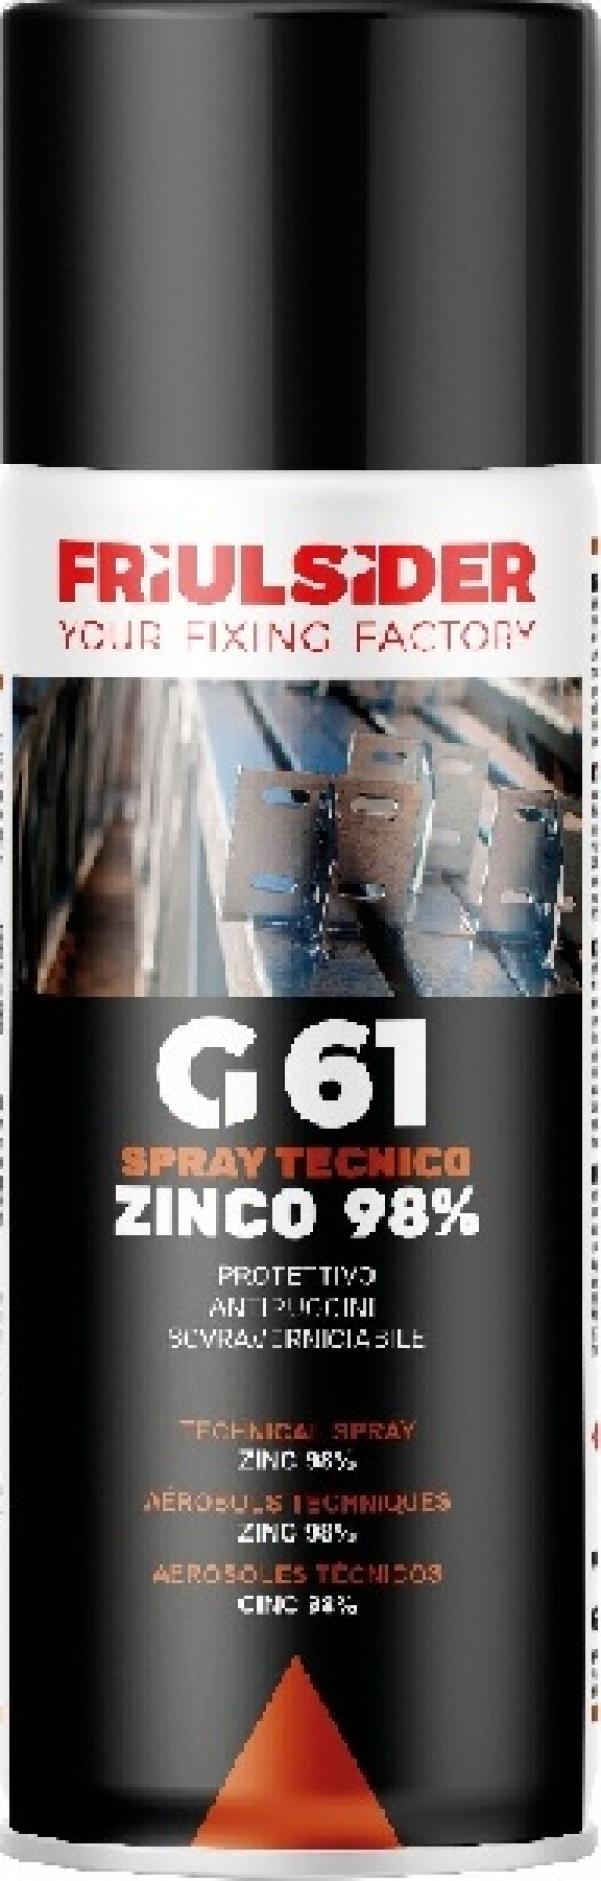 Zinco Scuro Spray 98% 400ml Friulsider G6100